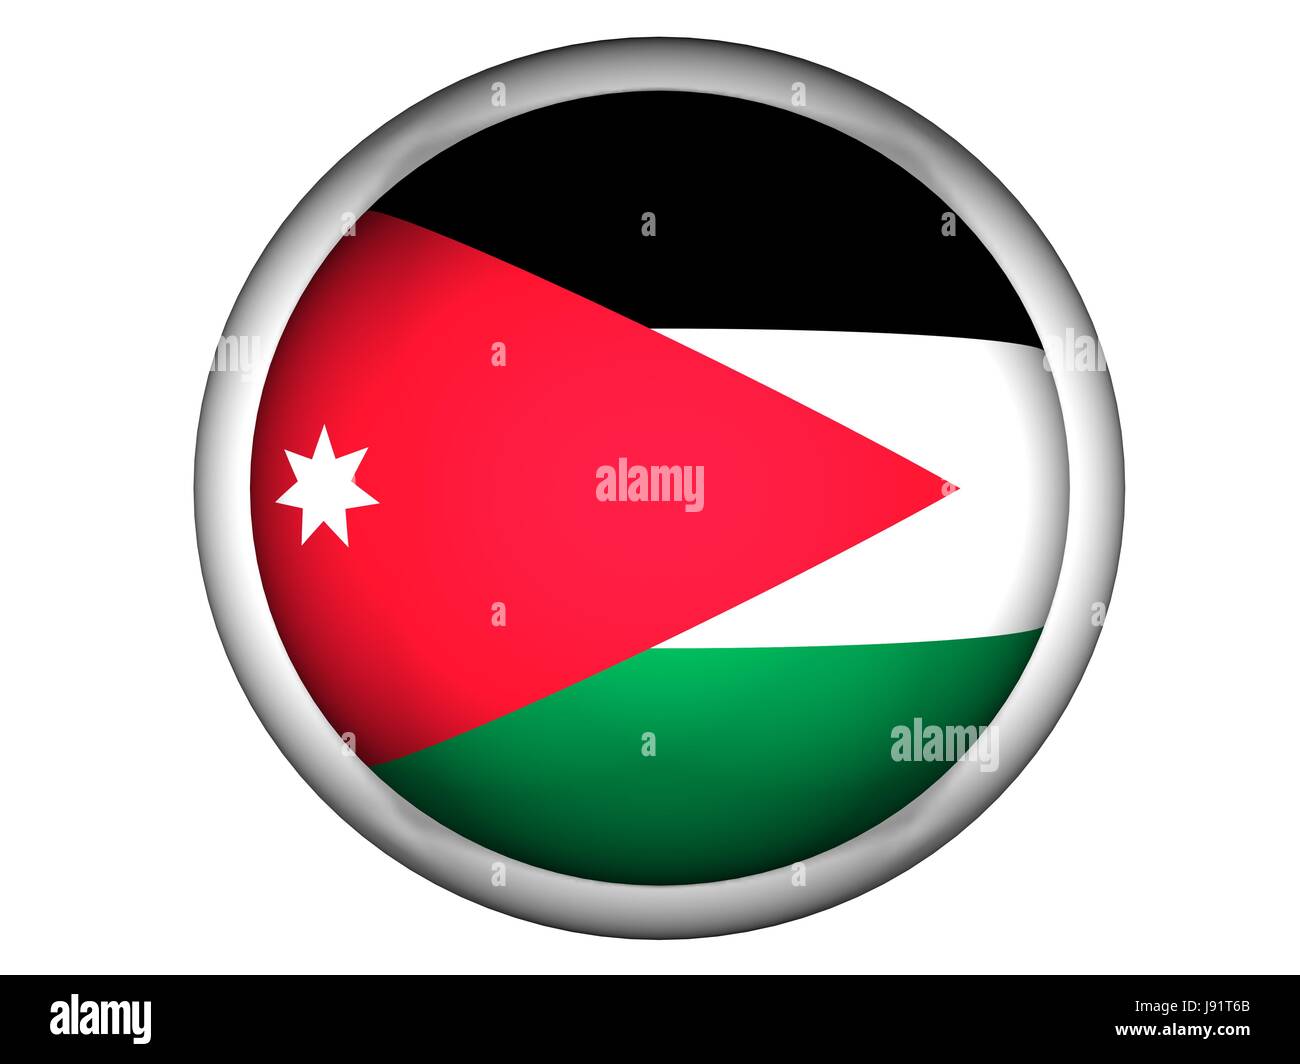 emblem, illustration, flag, circle, button, national, language Stock Photo - Alamy